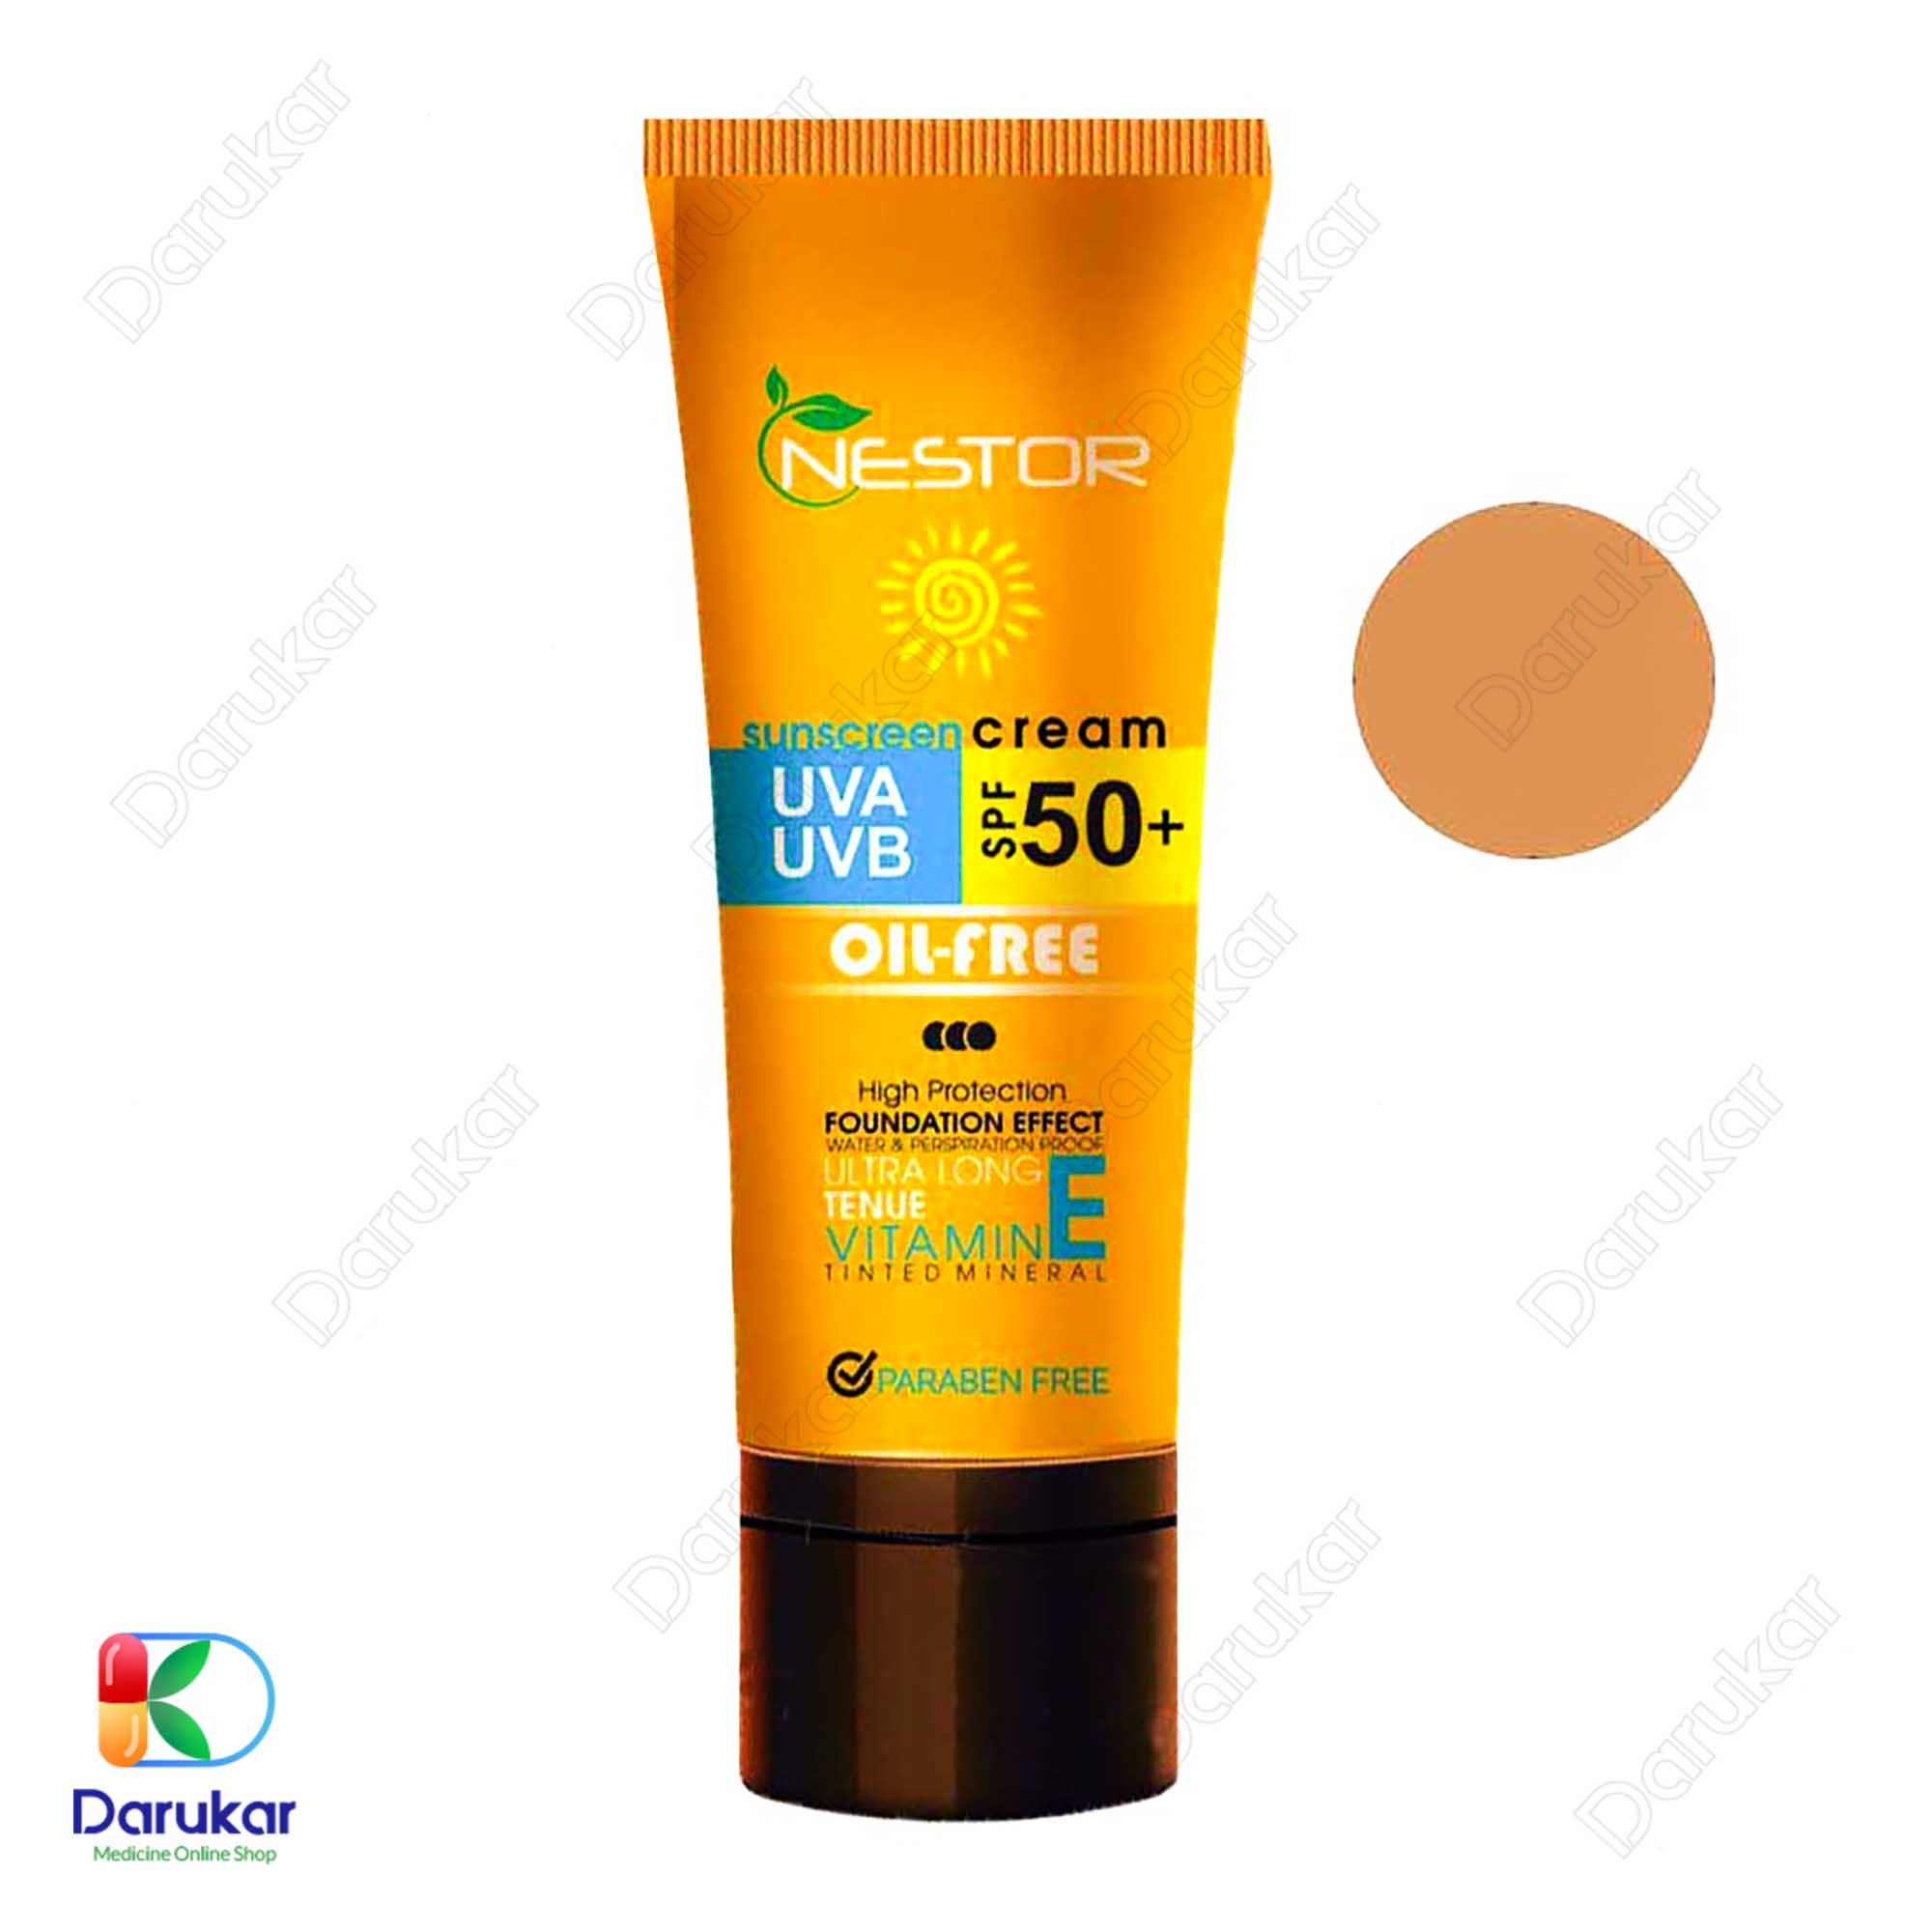 Nestor sunscreen cream oil free SPF50 1.5 1